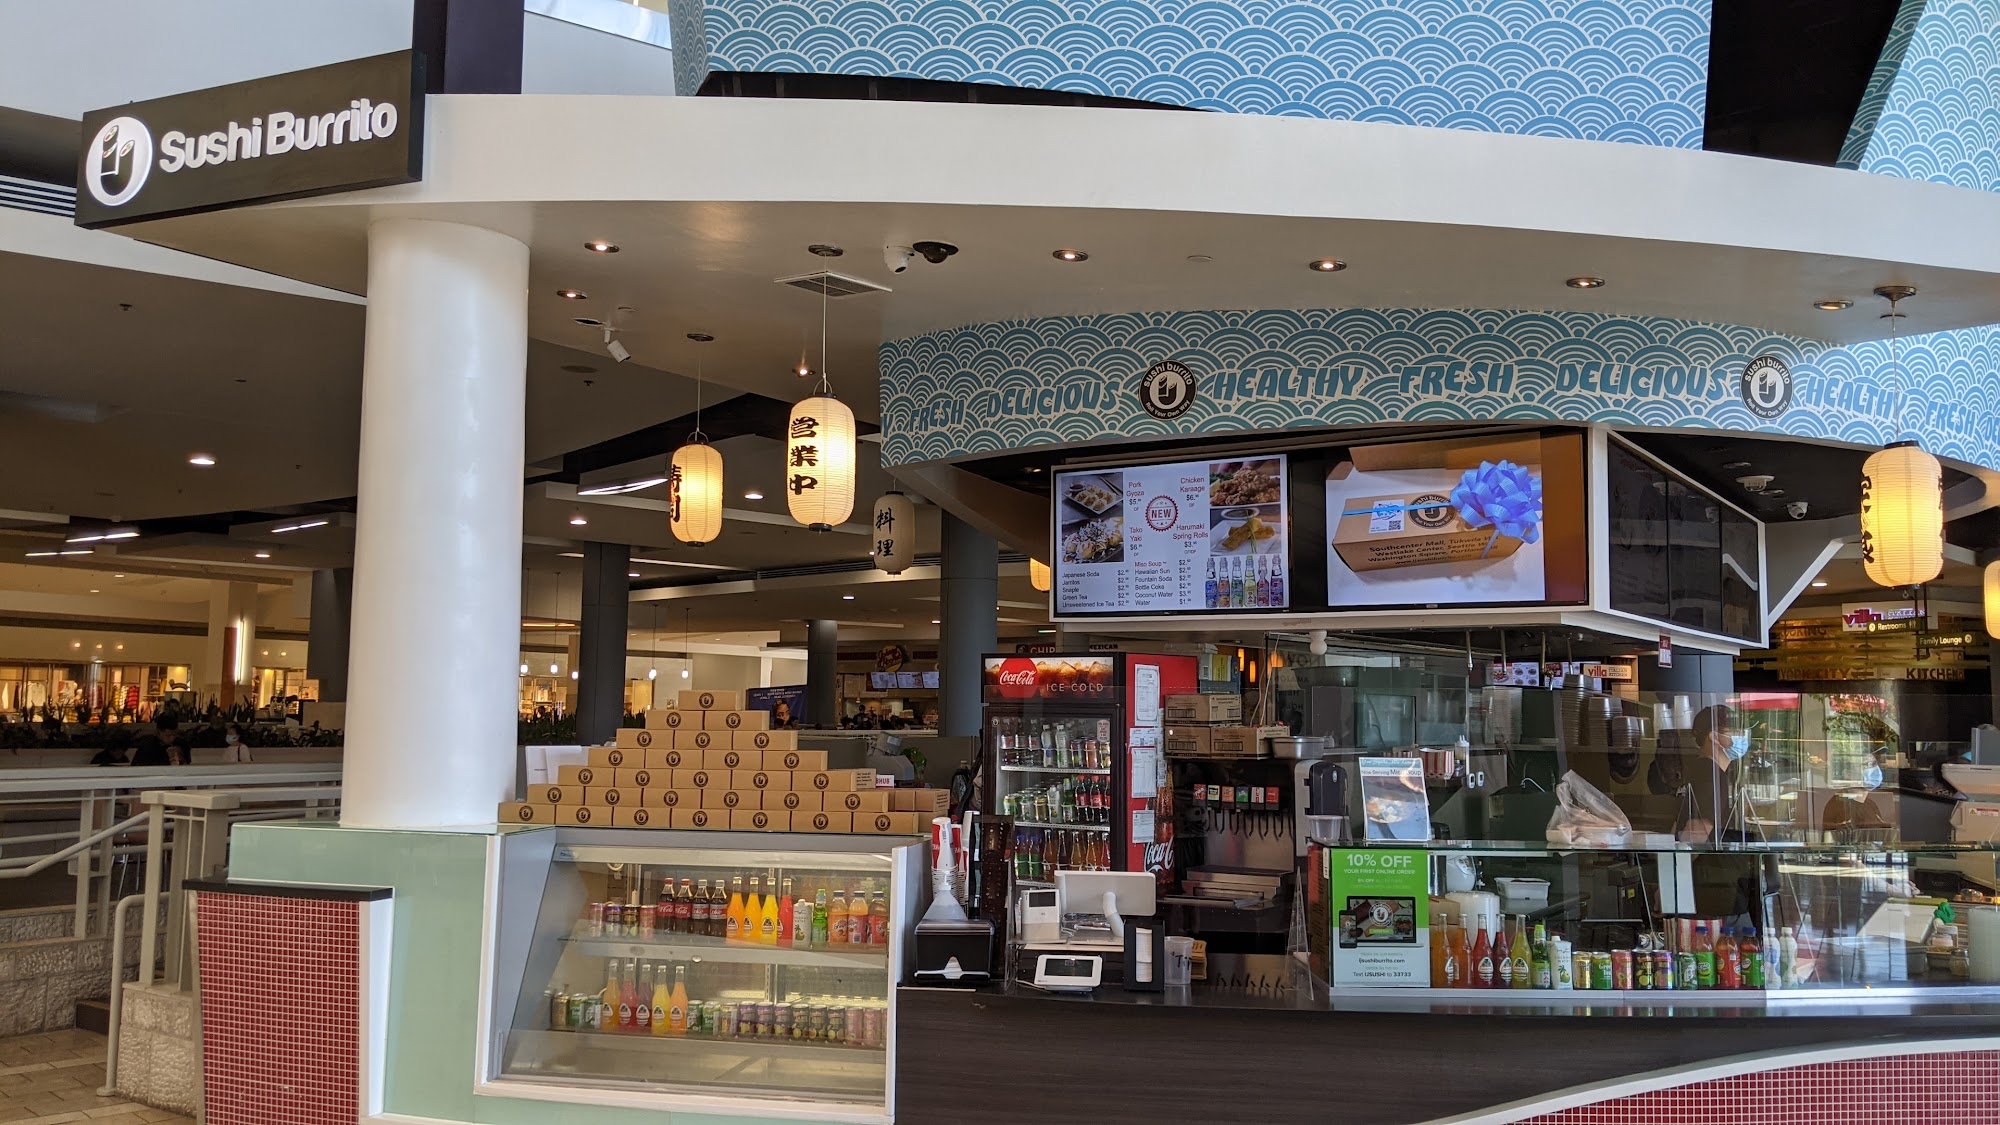 IJ Sushi Burrito - Southcenter mall